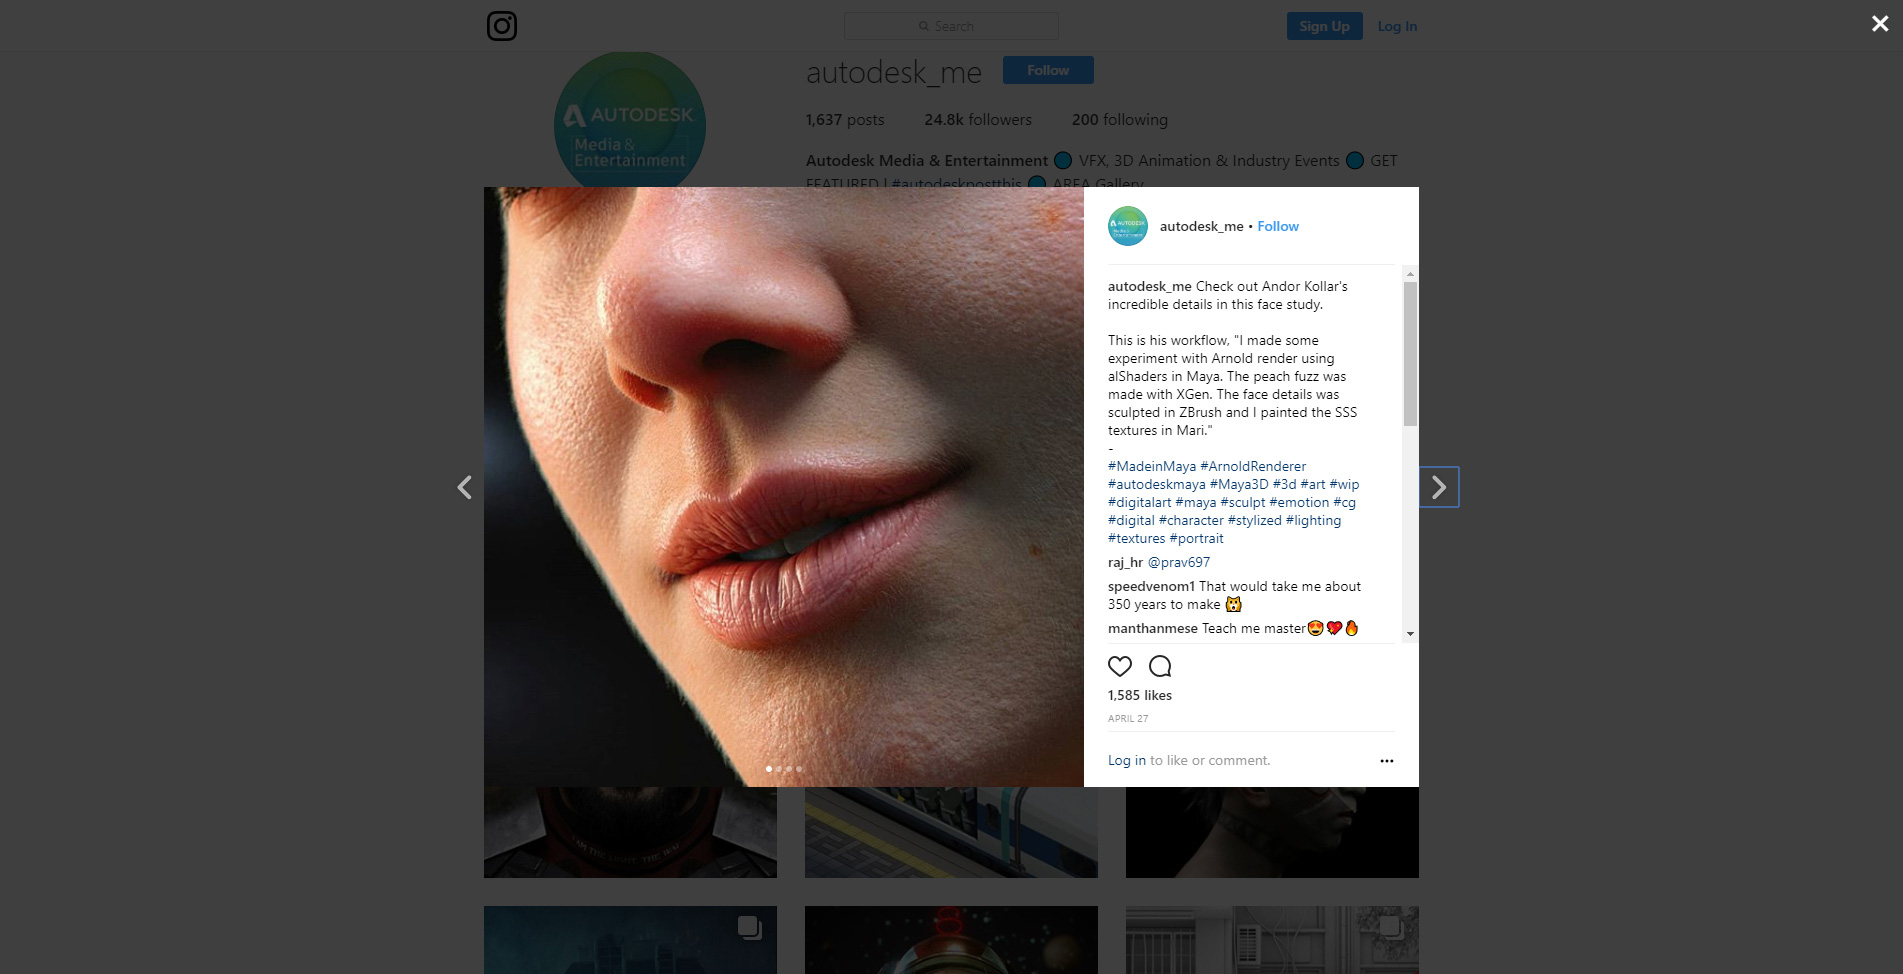 Autodesk Instagram Andor Kollar featured artwork 